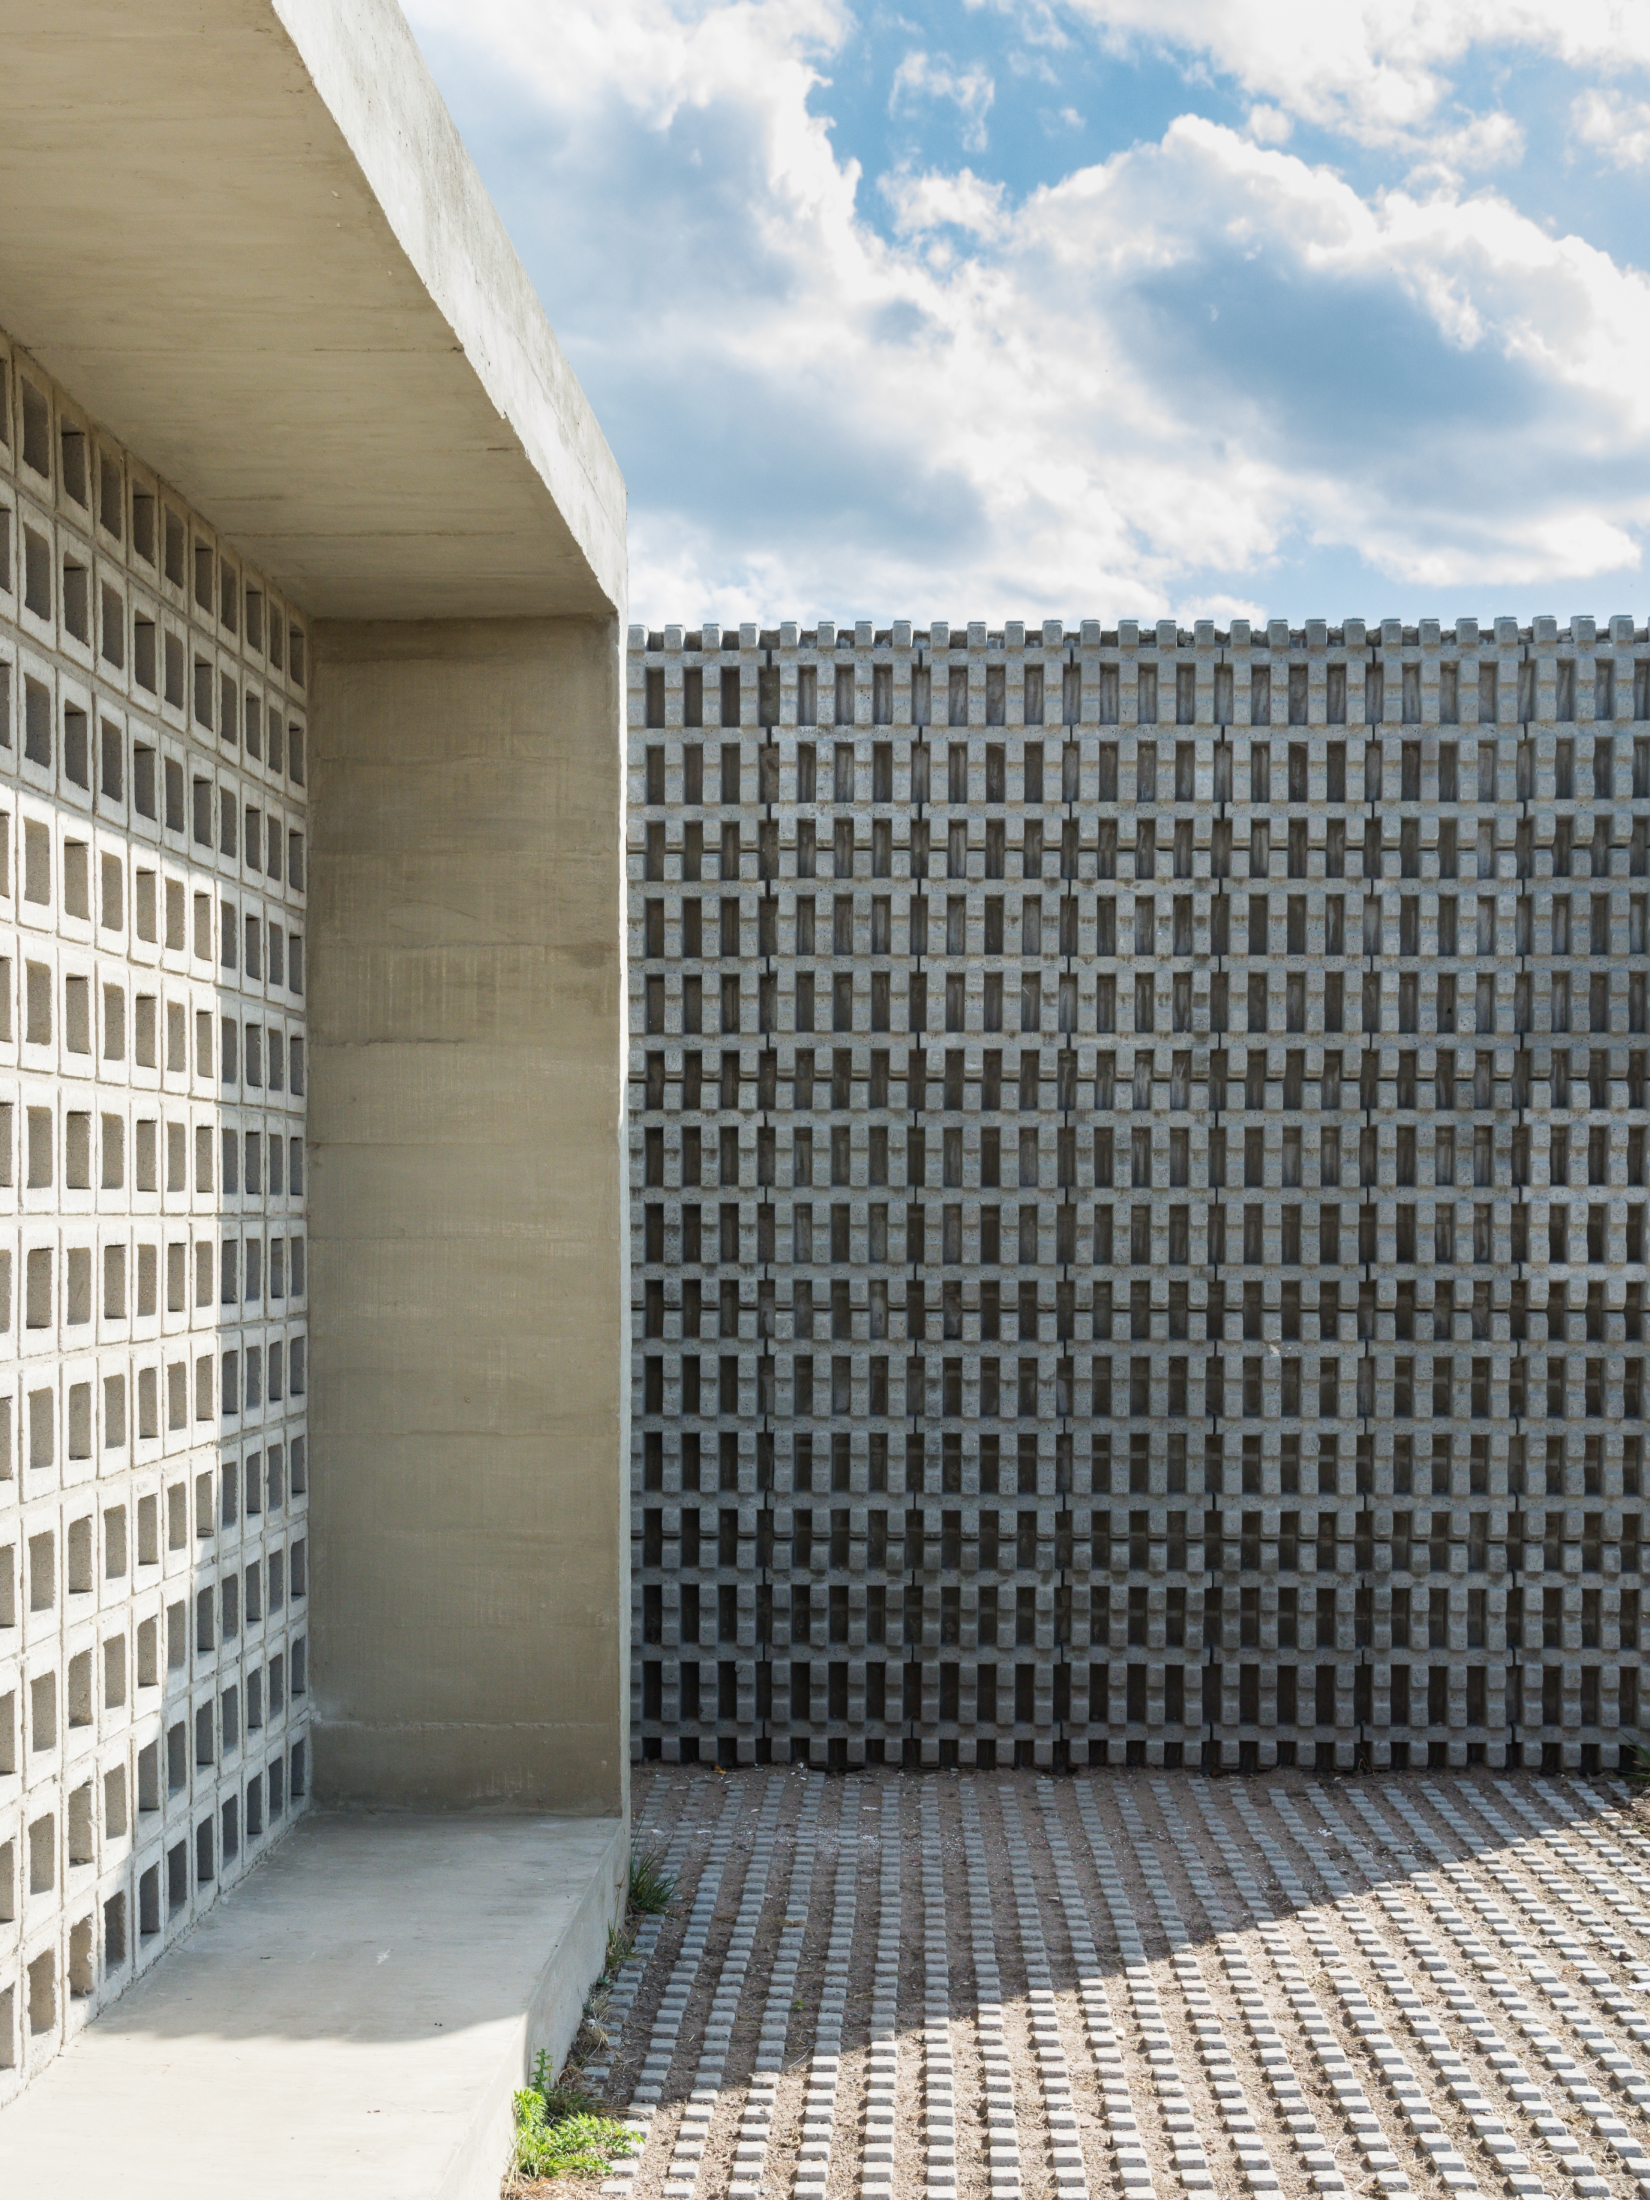 Arquitectura contemporÃ¡nea con bloques de hormigÃ³n